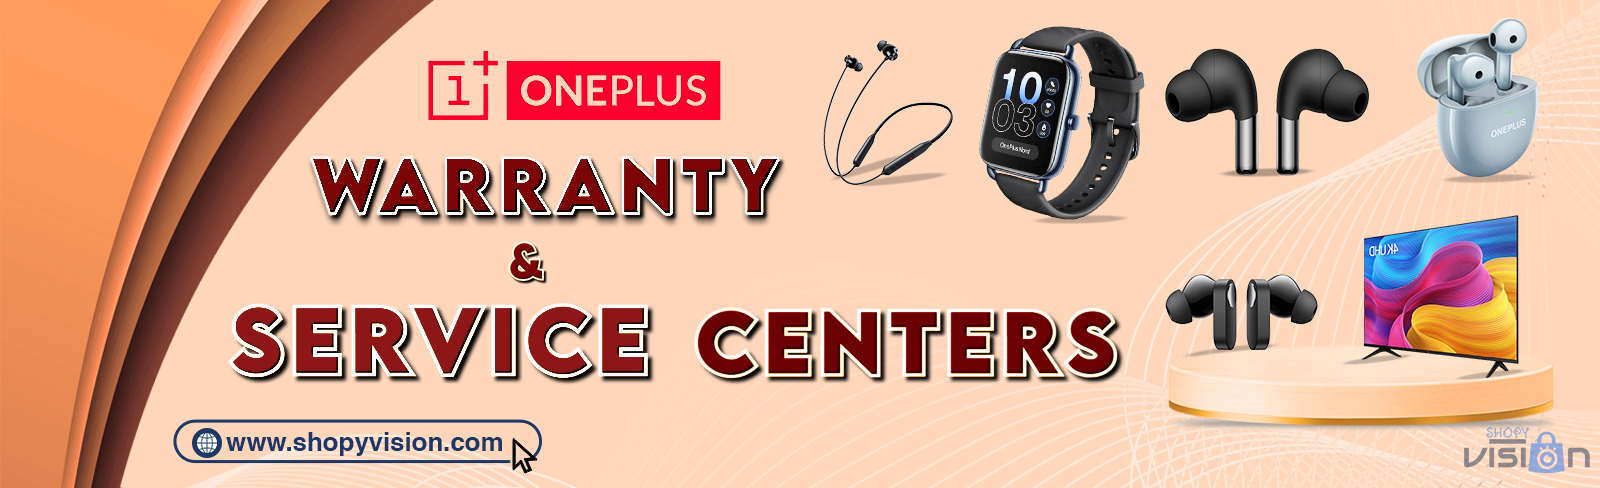 OnePlus Warranty & Service Center in India